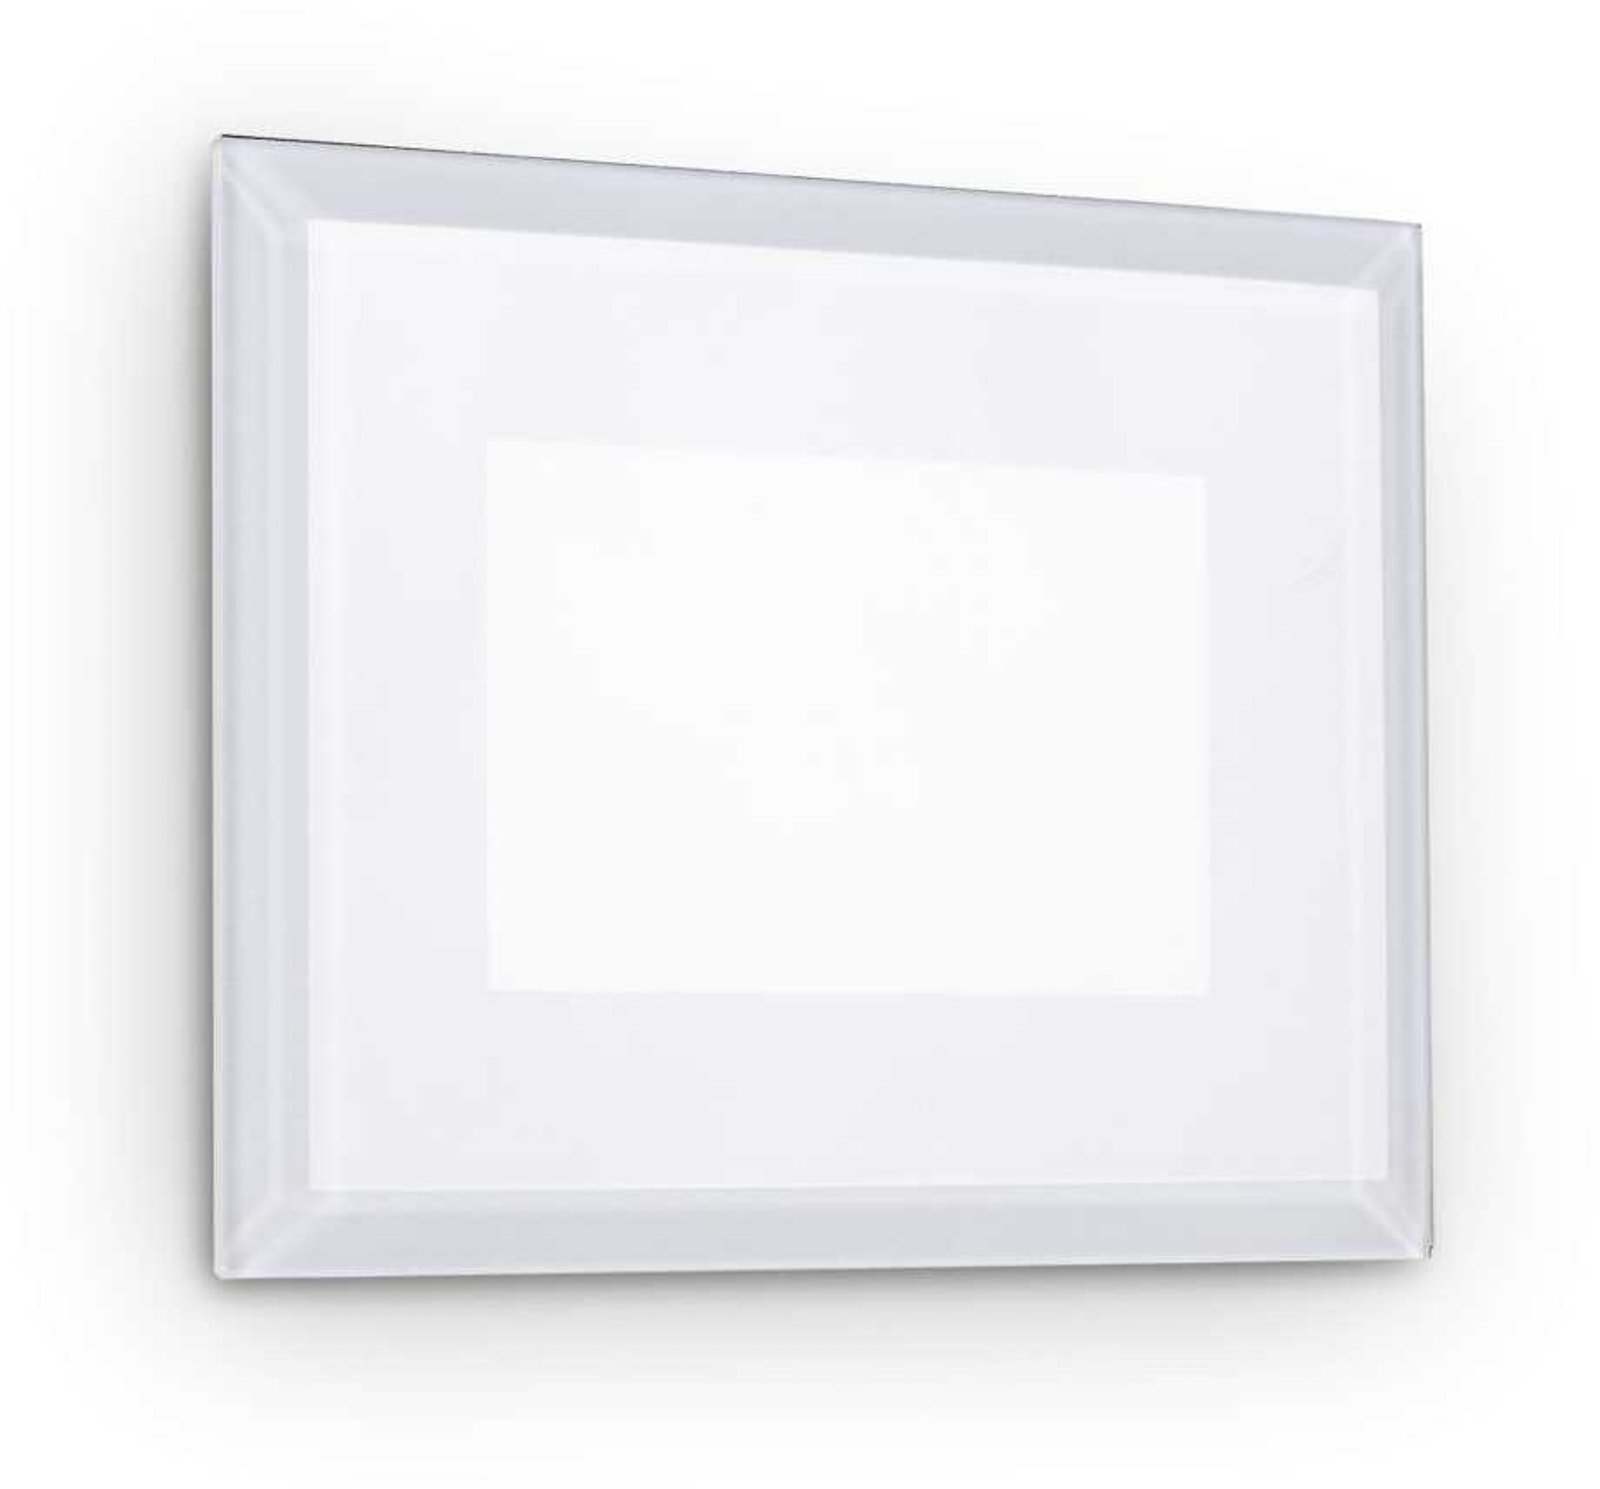 Indio, Udendørs indbygningslampe, Fi, aluminium by Ideal Lux (H: 8 cm. x B: 7 cm. x L: 10 cm., Hvid/Antracit)